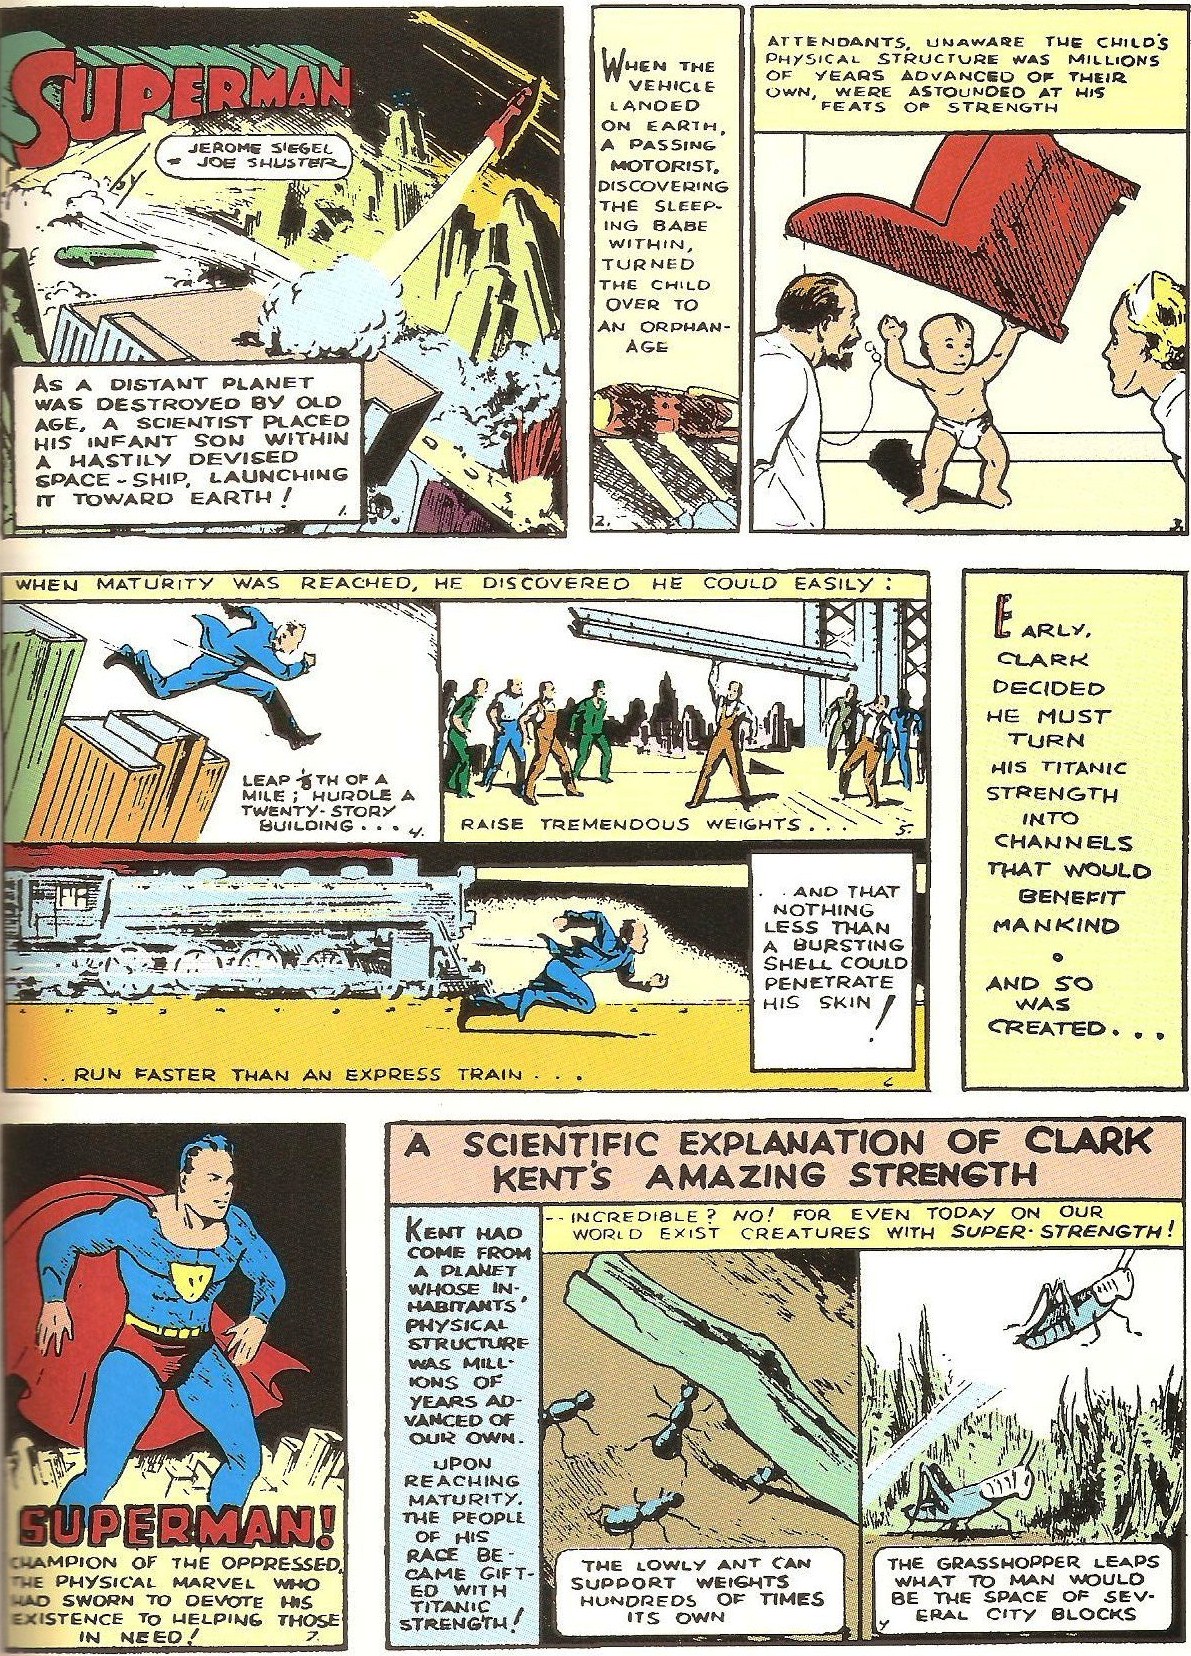 Superman origins comic